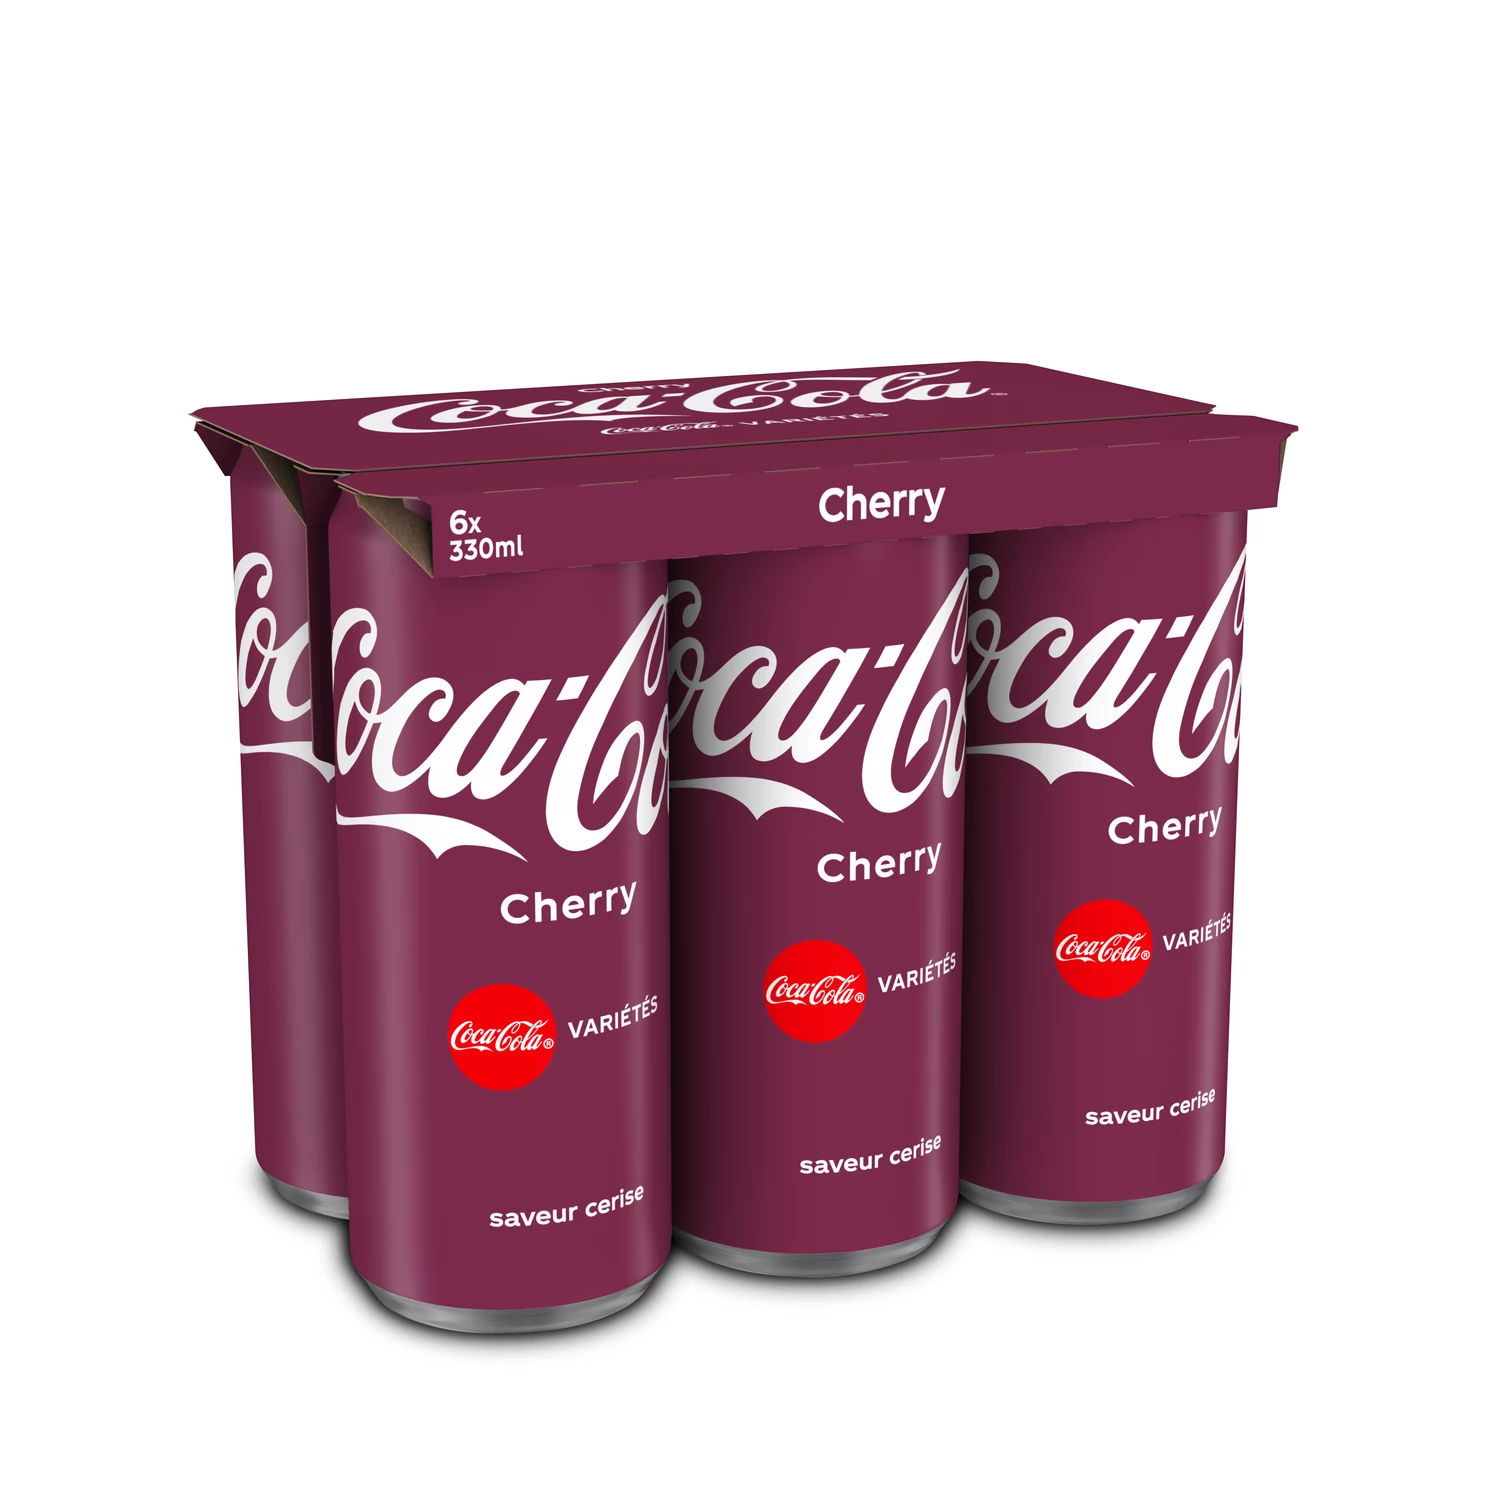 Cherry Coca Cola Bt Kiểu Dáng Đẹp 6x33